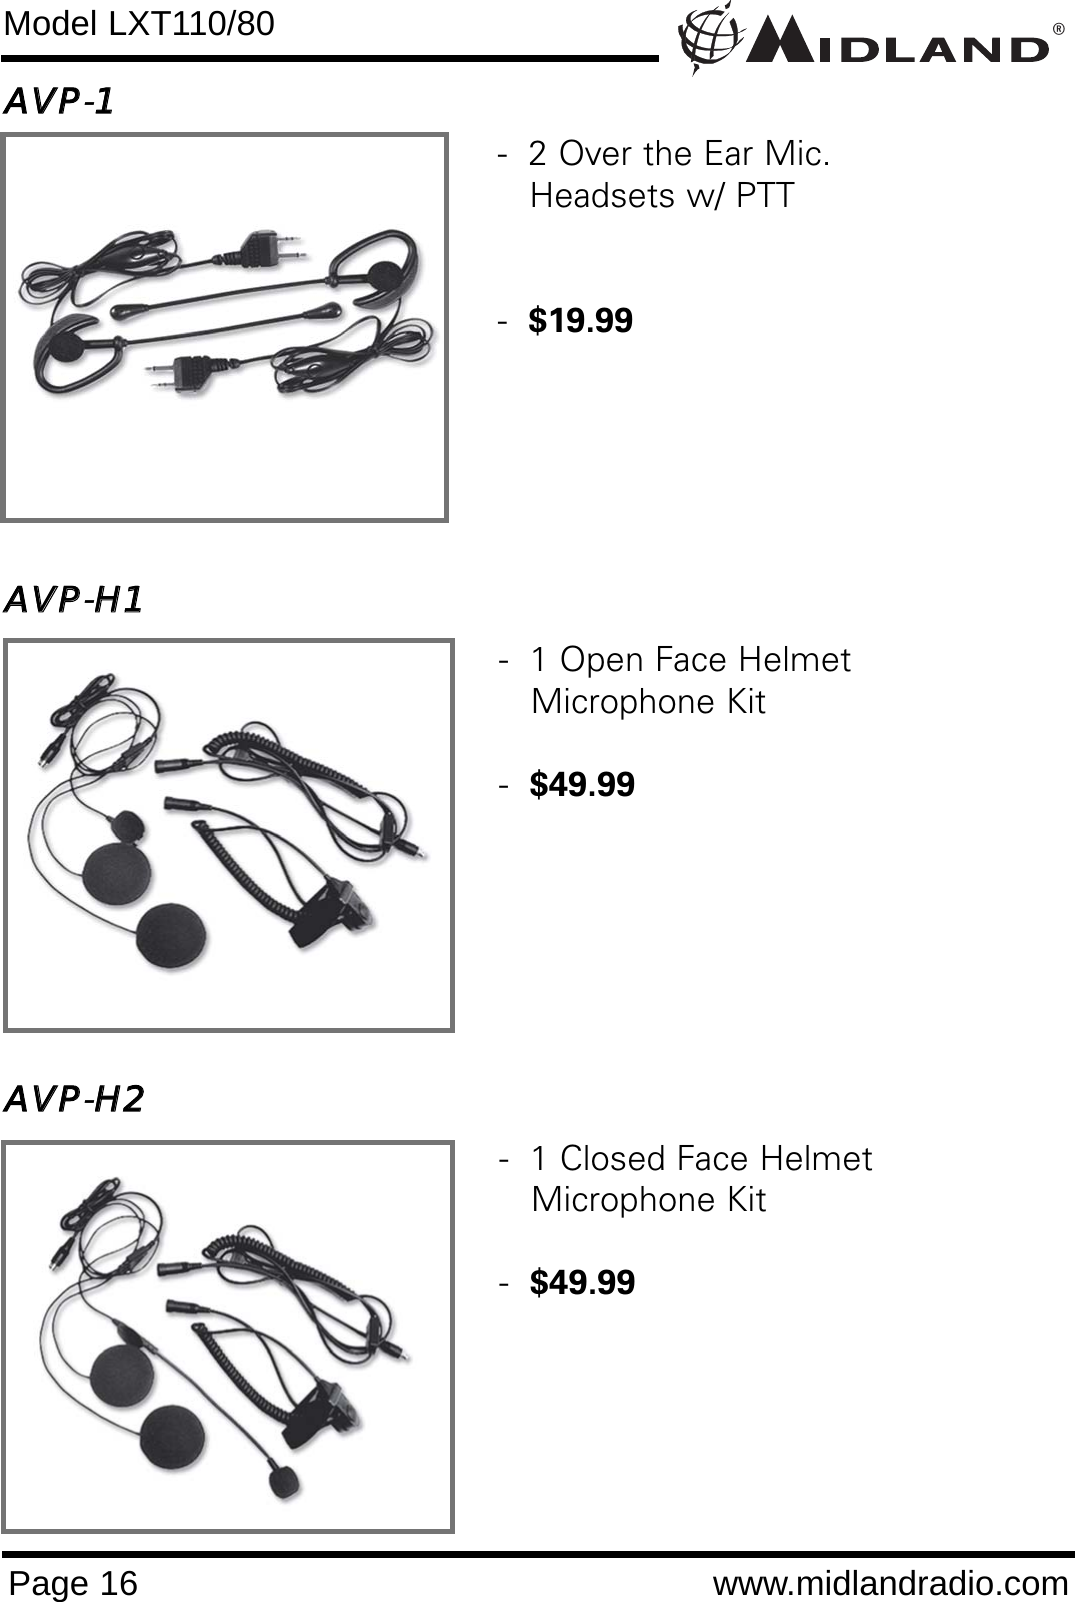 AAVVPP-11AAVVPP-HH11AAVVPP-HH22®Page 16 www.midlandradio.comModel LXT110/80-  1 Open Face Helmet Microphone Kit-  $49.99-  1 Closed Face HelmetMicrophone Kit-  $49.99-  2 Over the Ear Mic. Headsets w/ PTT-  $19.99